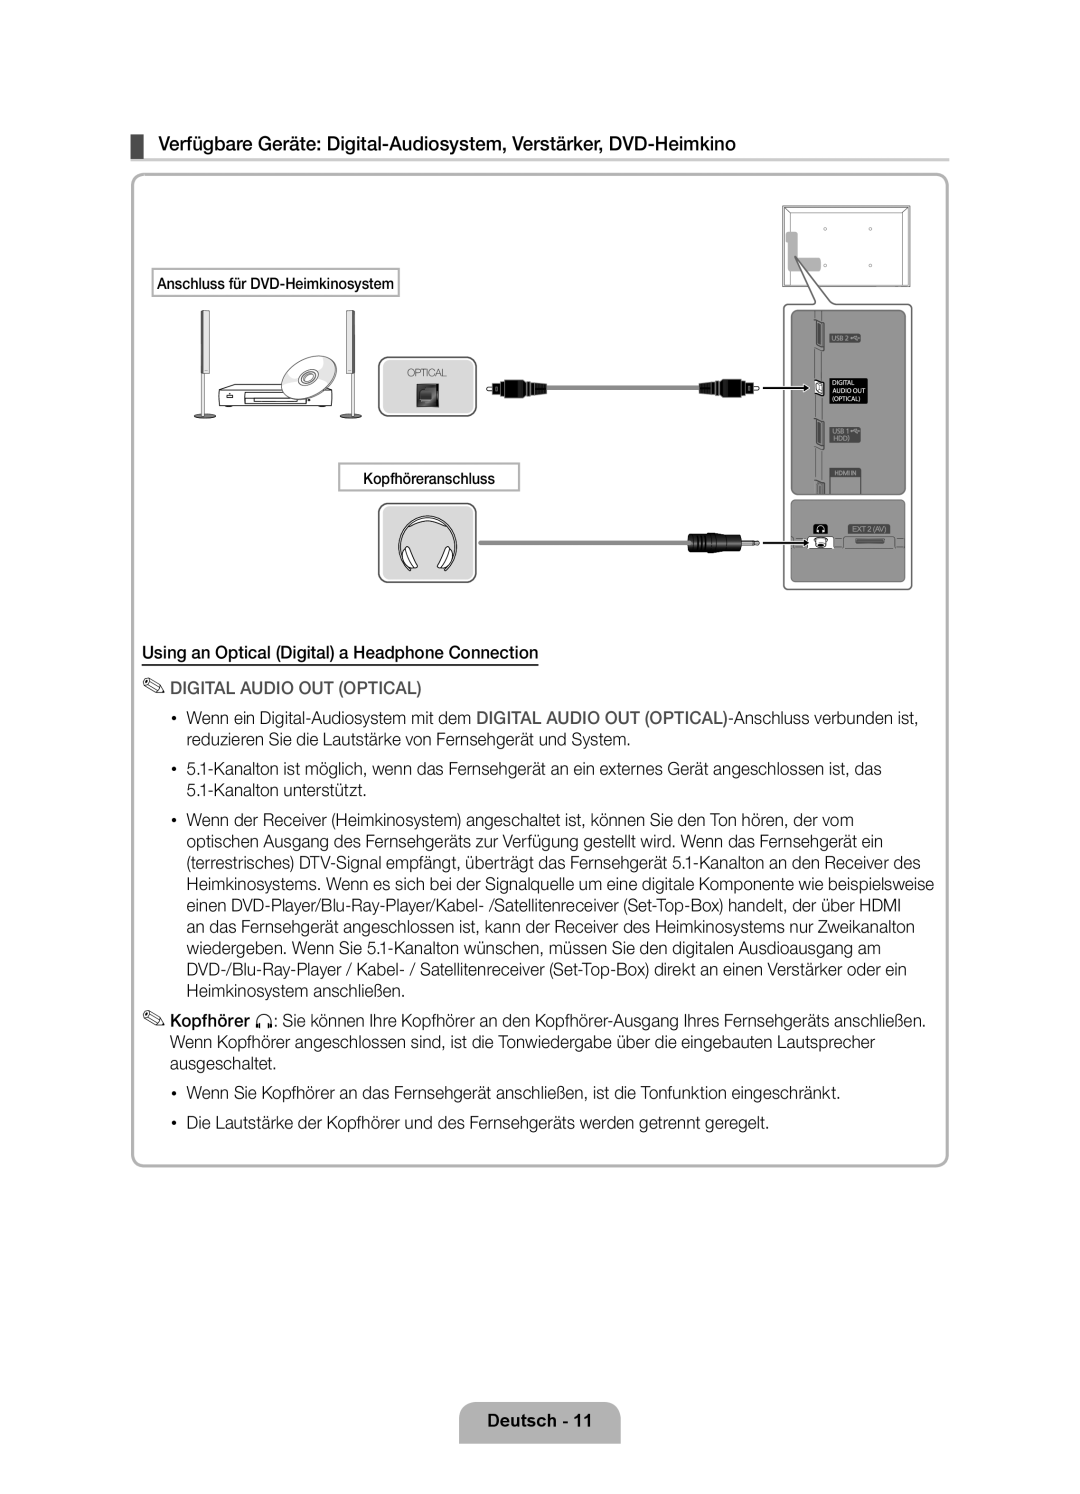 Samsung UE40D7000LSXZF Verfügbare Geräte Digital-Audiosystem, Verstärker, DVD-Heimkino, Digital Audio Out Optical, Deutsch 